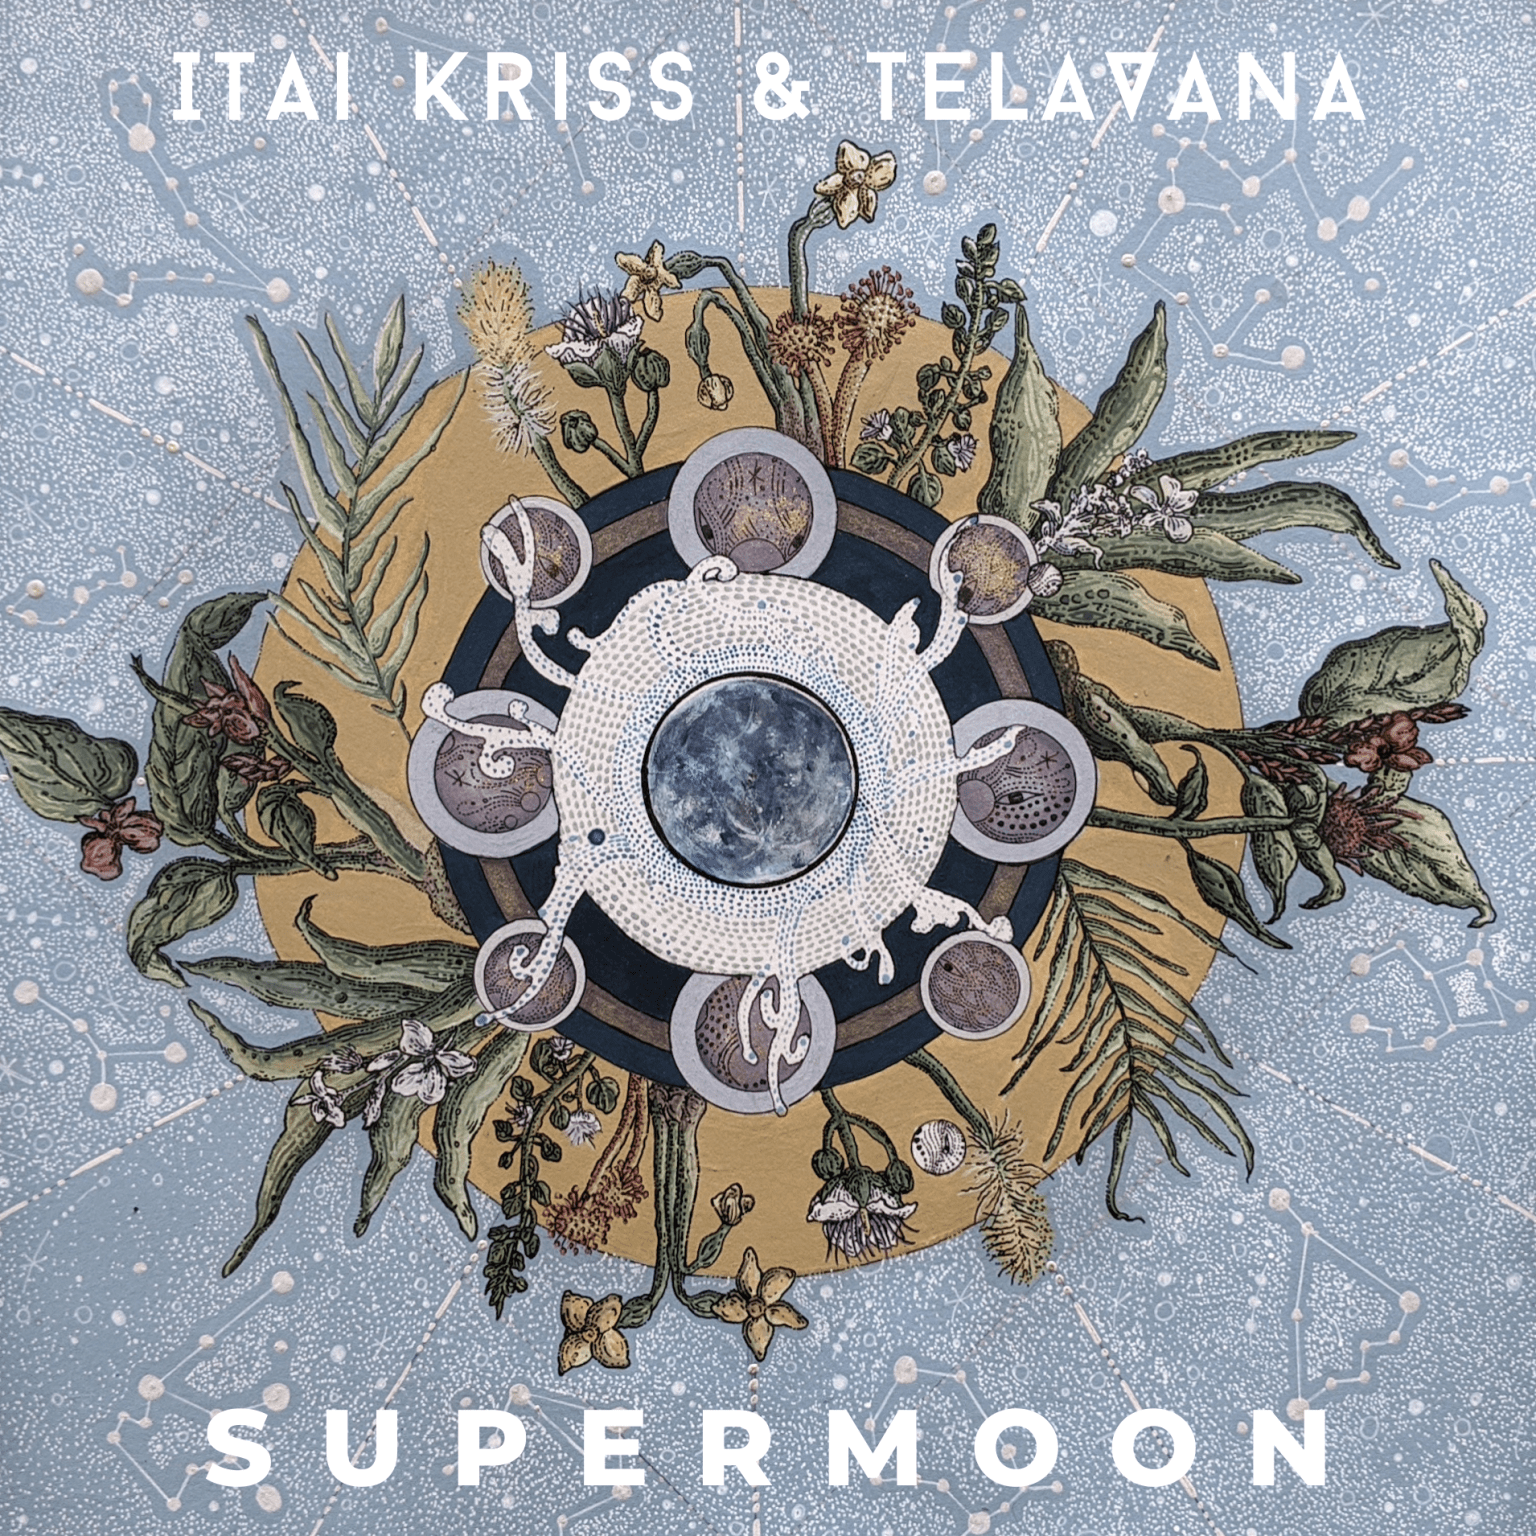 ITAI KRISS - Supermoon cover 